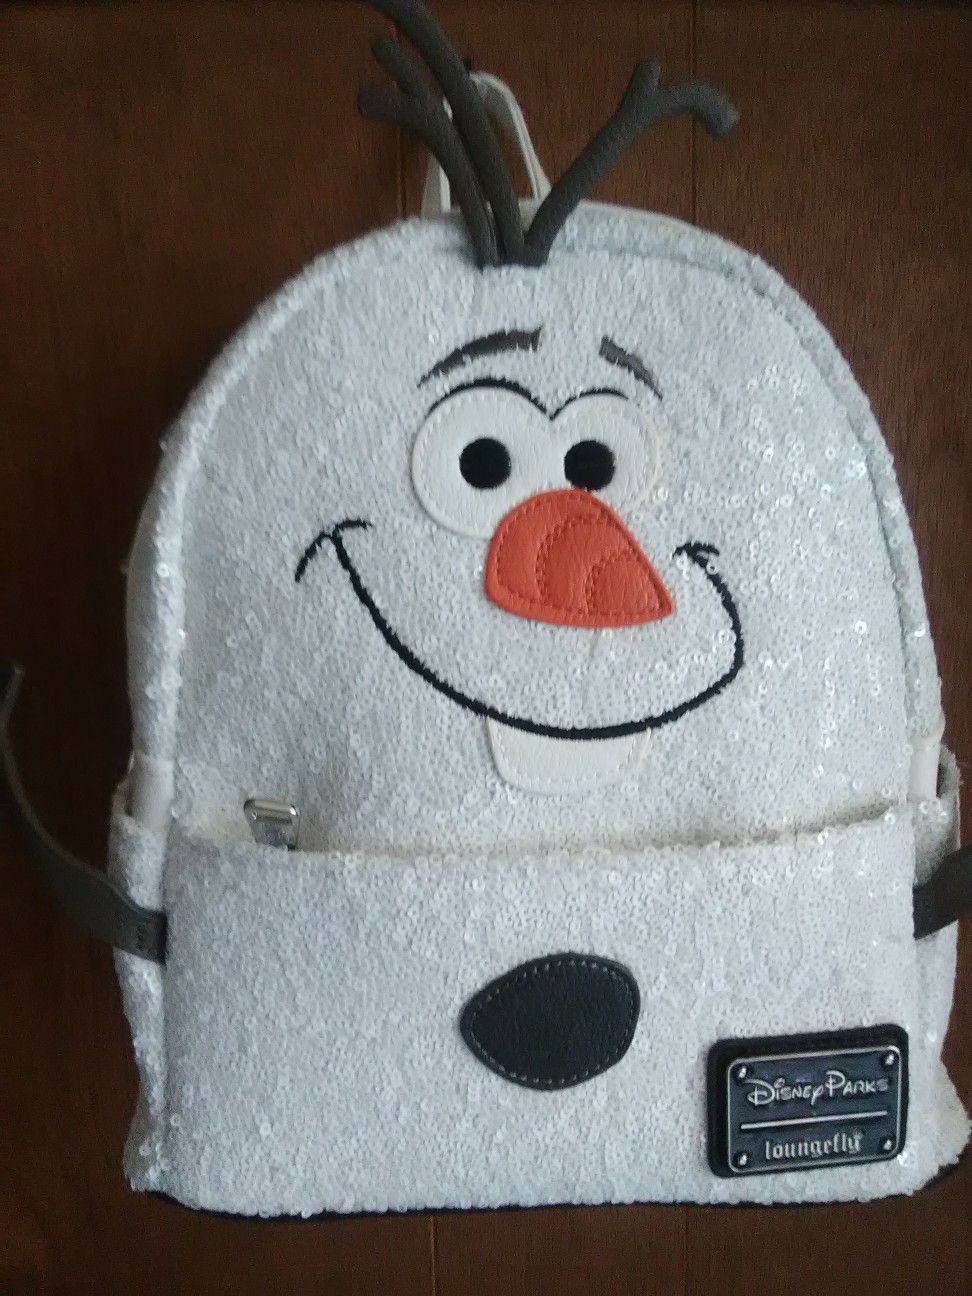 Loungefly Disney Olaf backpack brand new